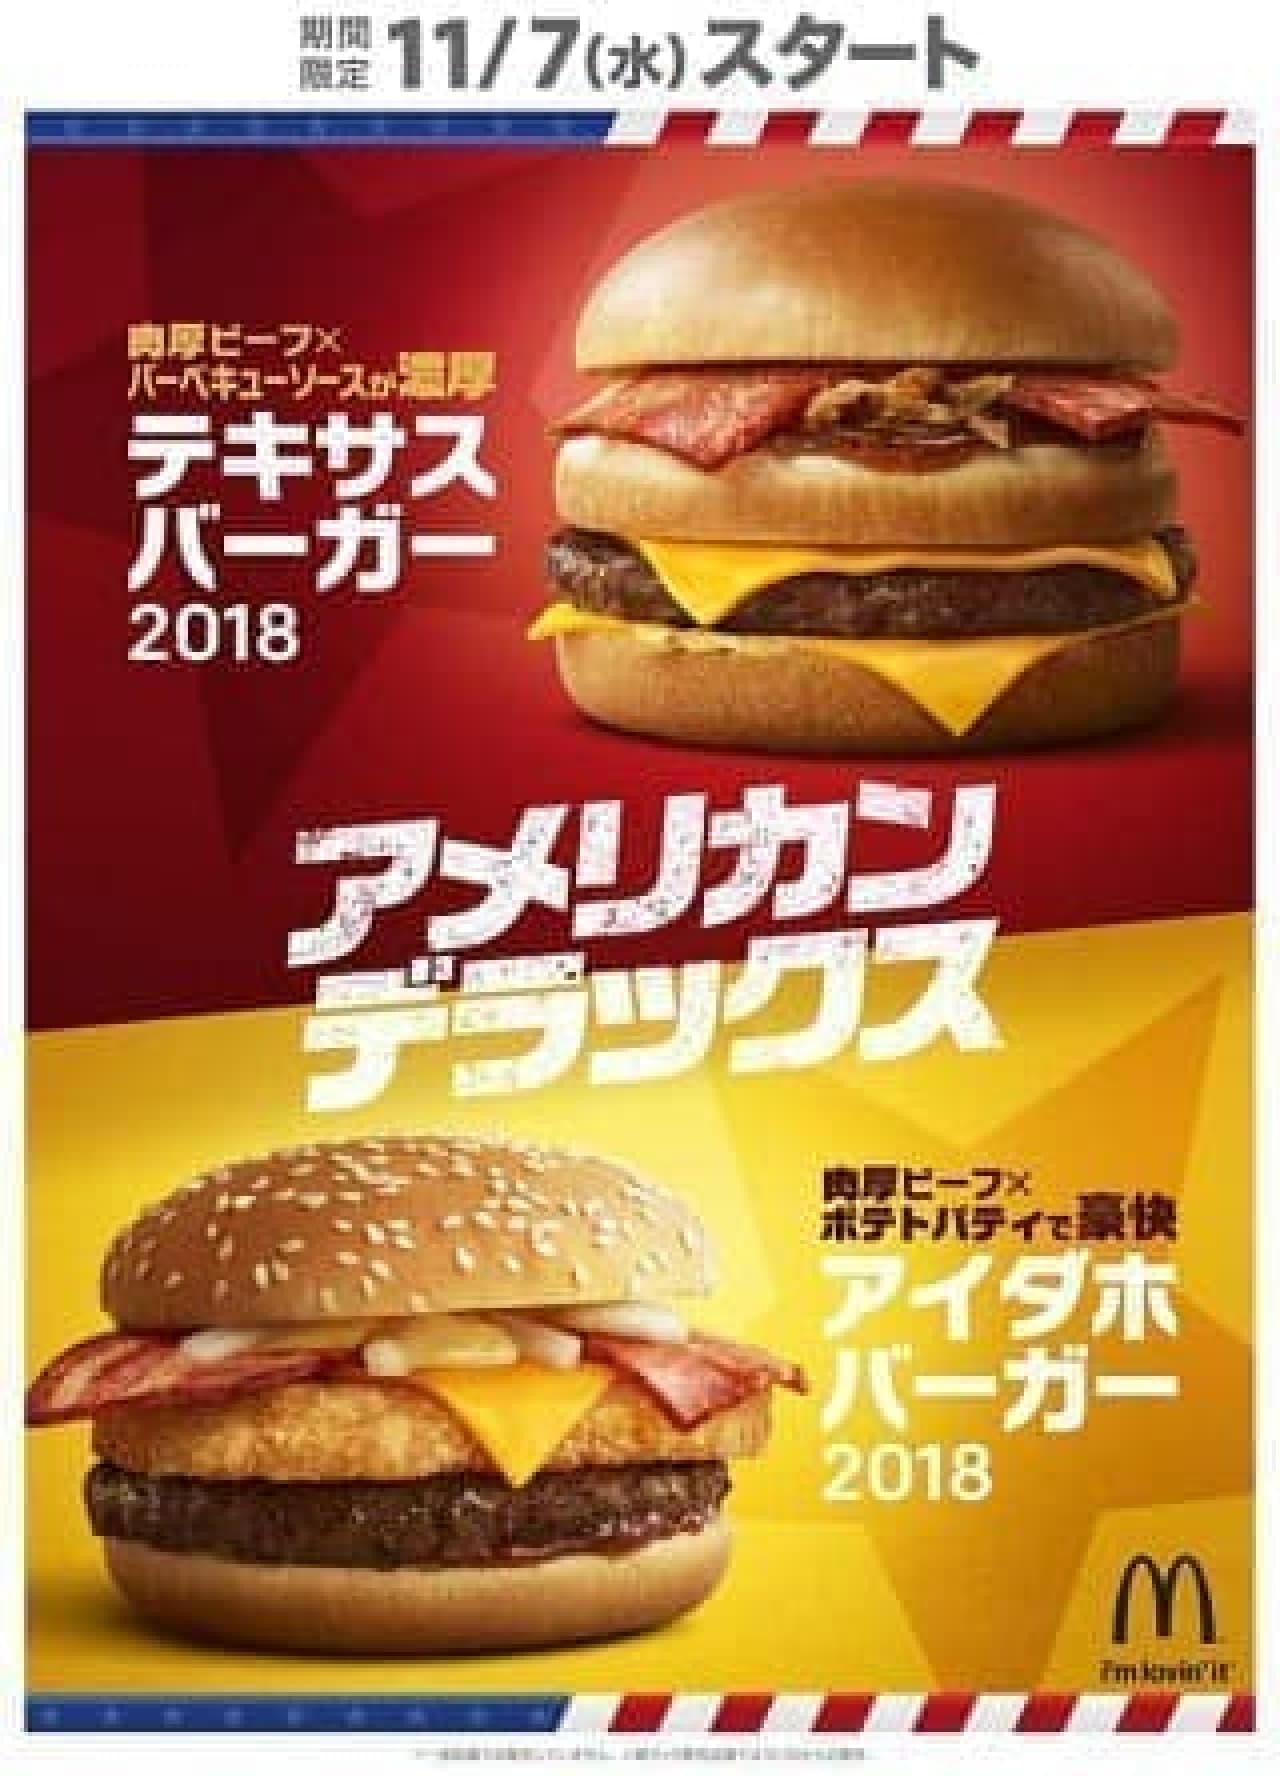 McDonald's `` Texas Burger 2018'' and `` Aida Hoburger 2018''